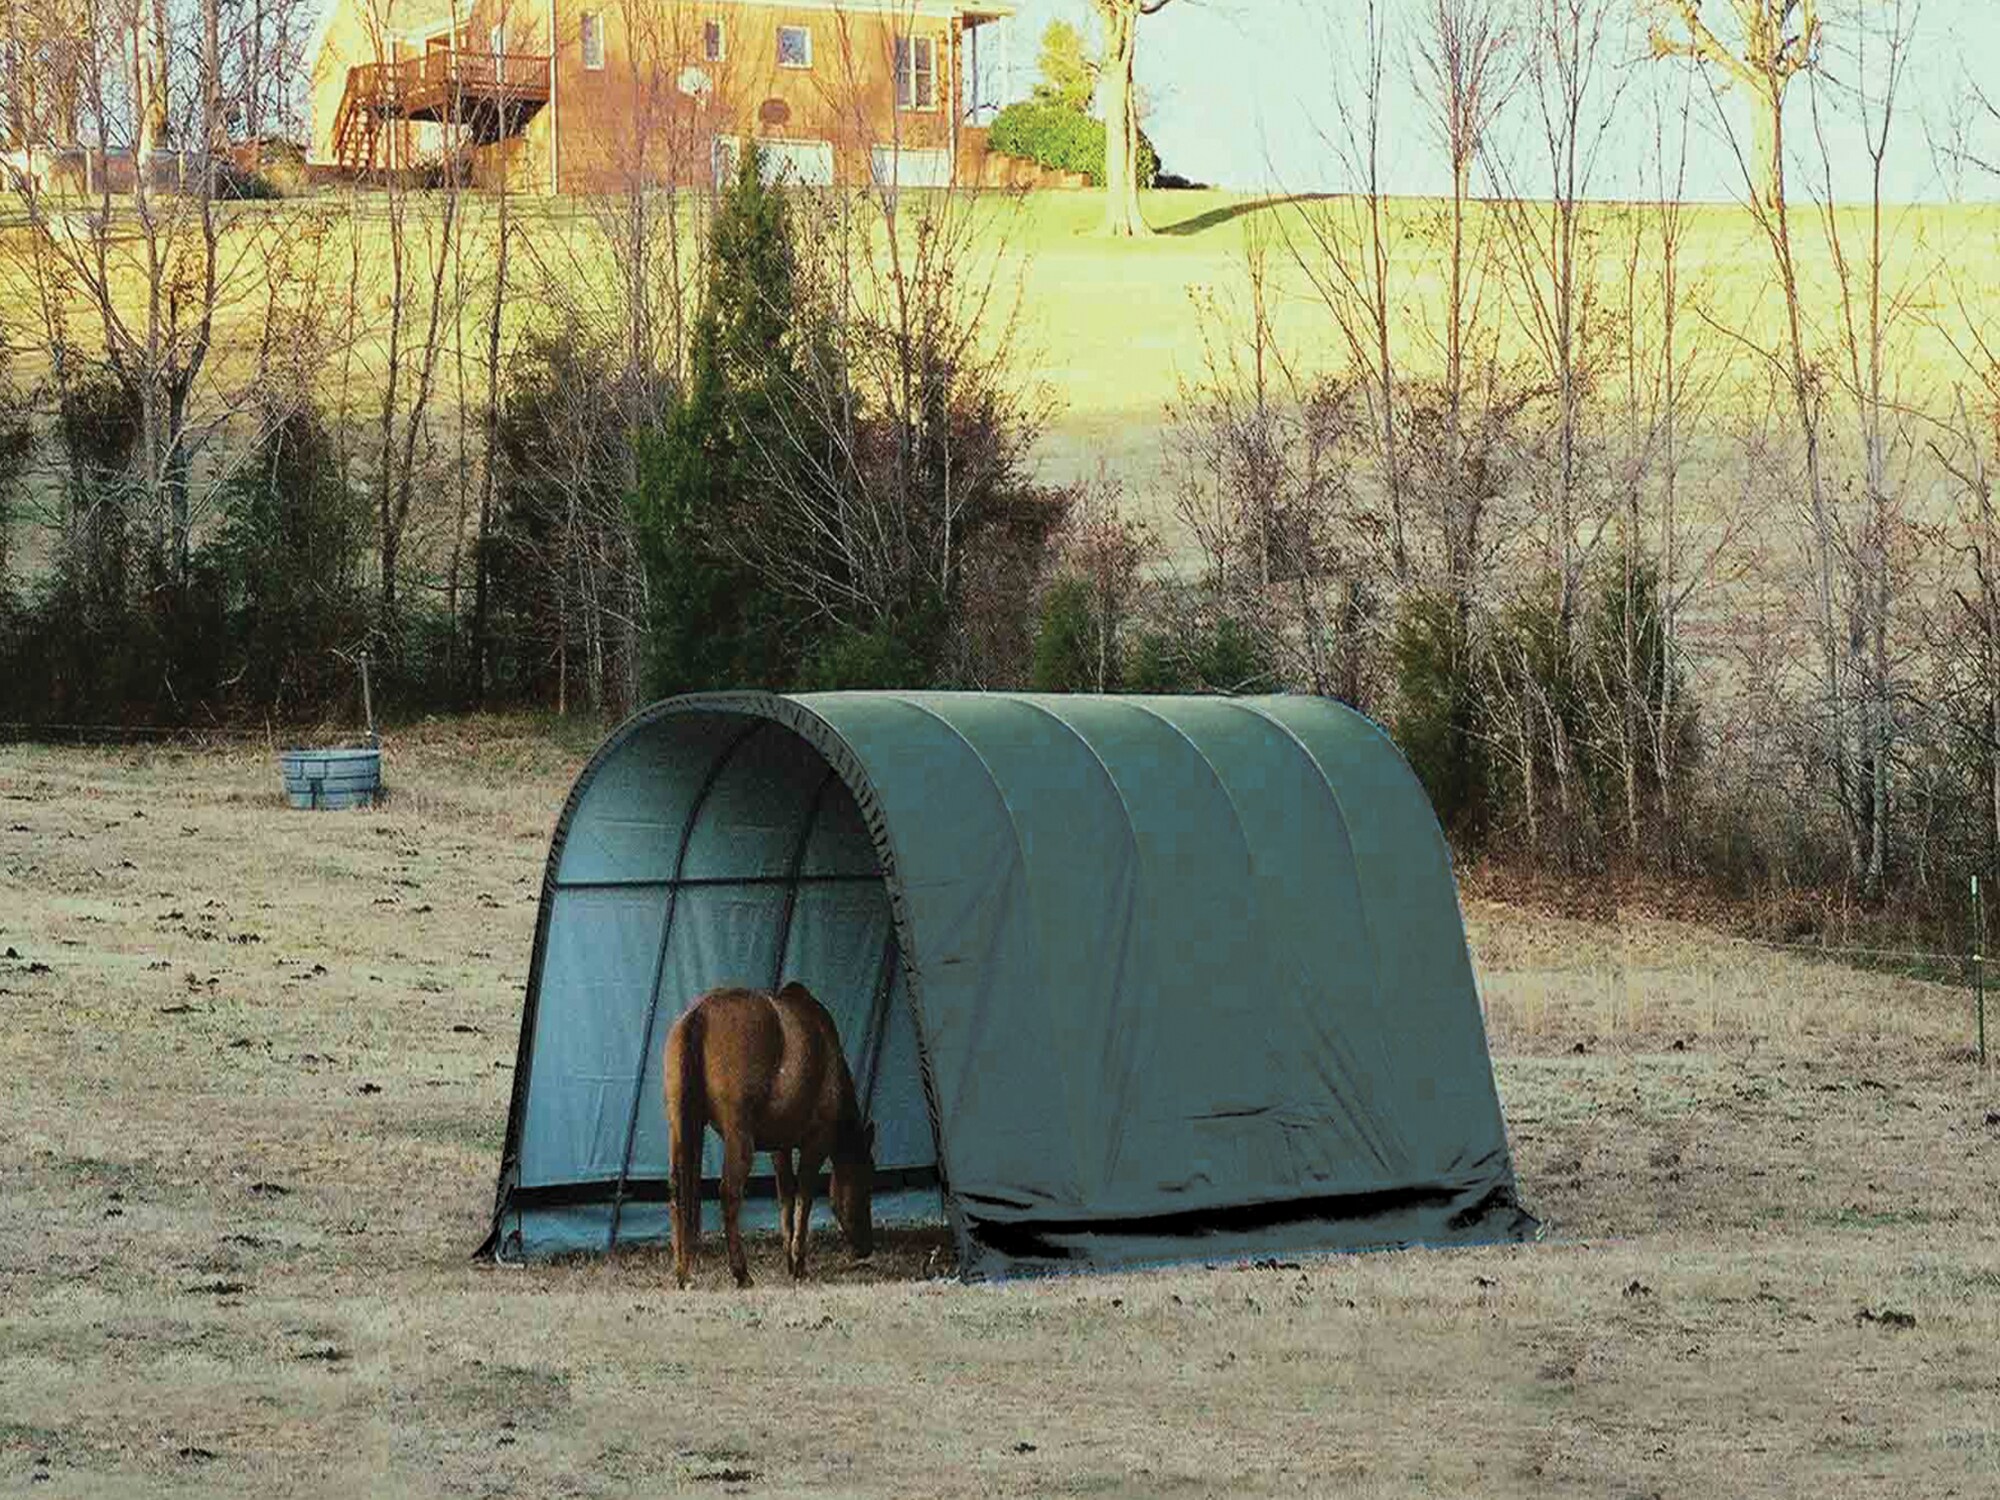 Pop-Up Versa Tents, Wall Adjacent Portable Utility Shelter